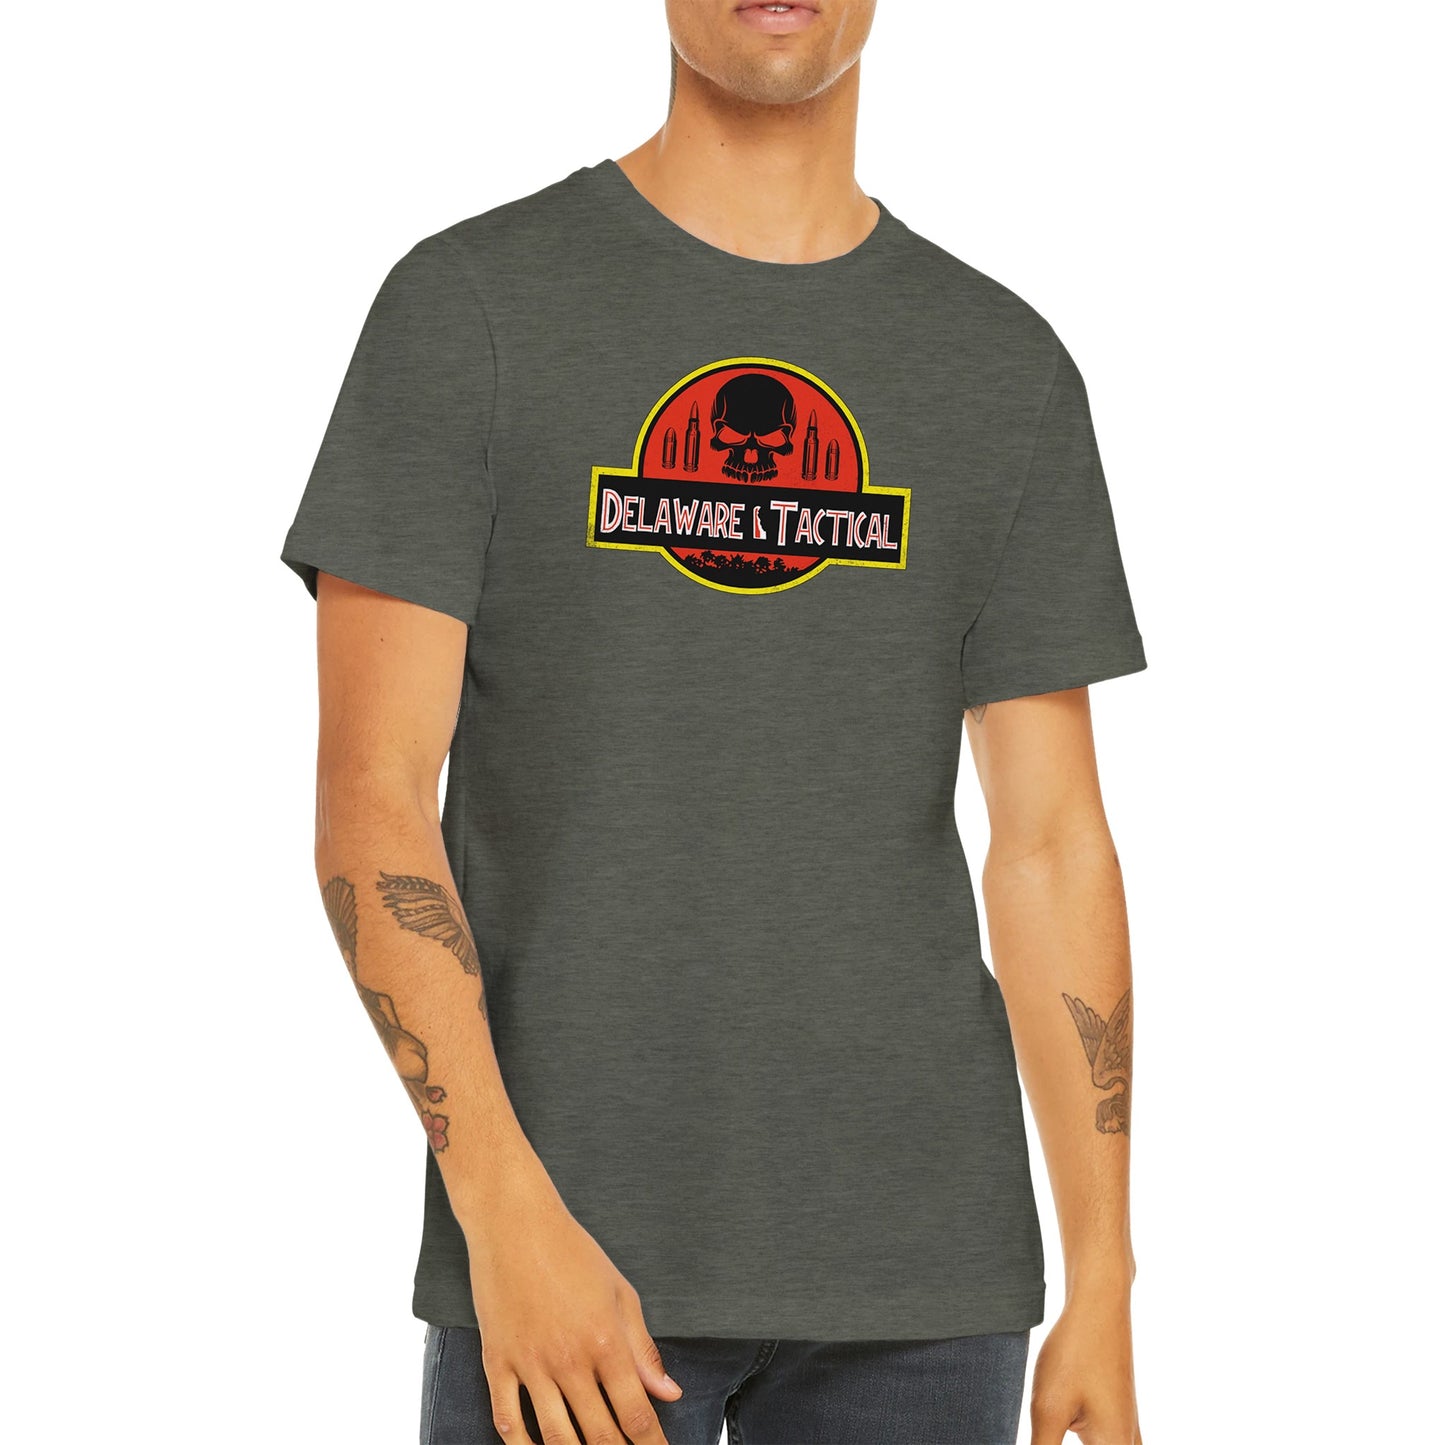 Delaware Tactical Jurassic Era Premium Unisex Crewneck T-shirt